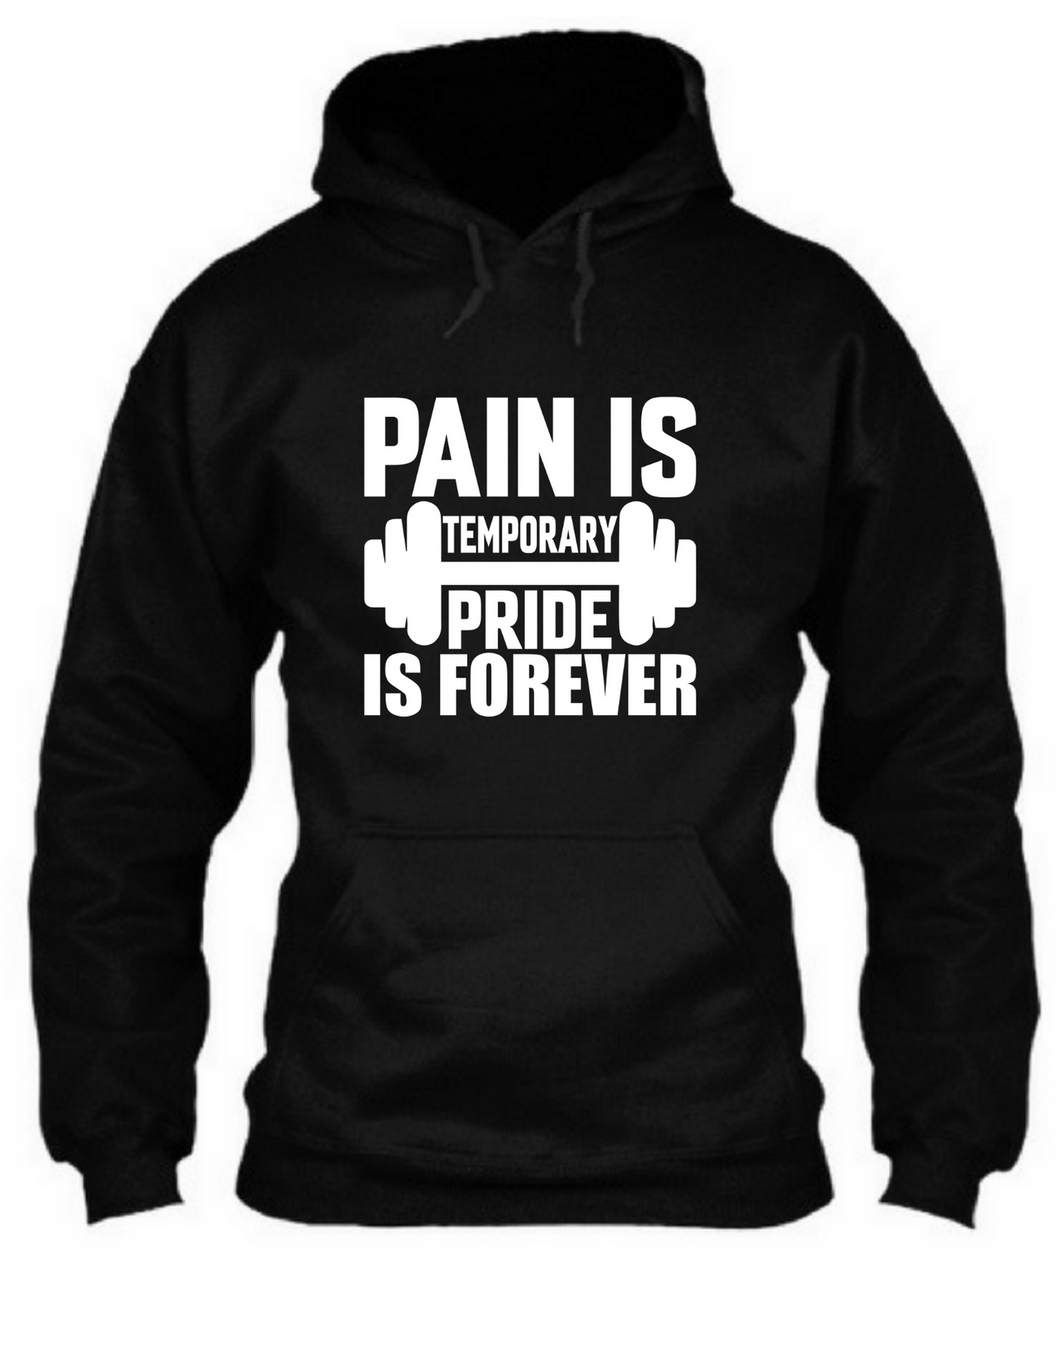 Pain is temporary pride is forever - Unisex hoodie